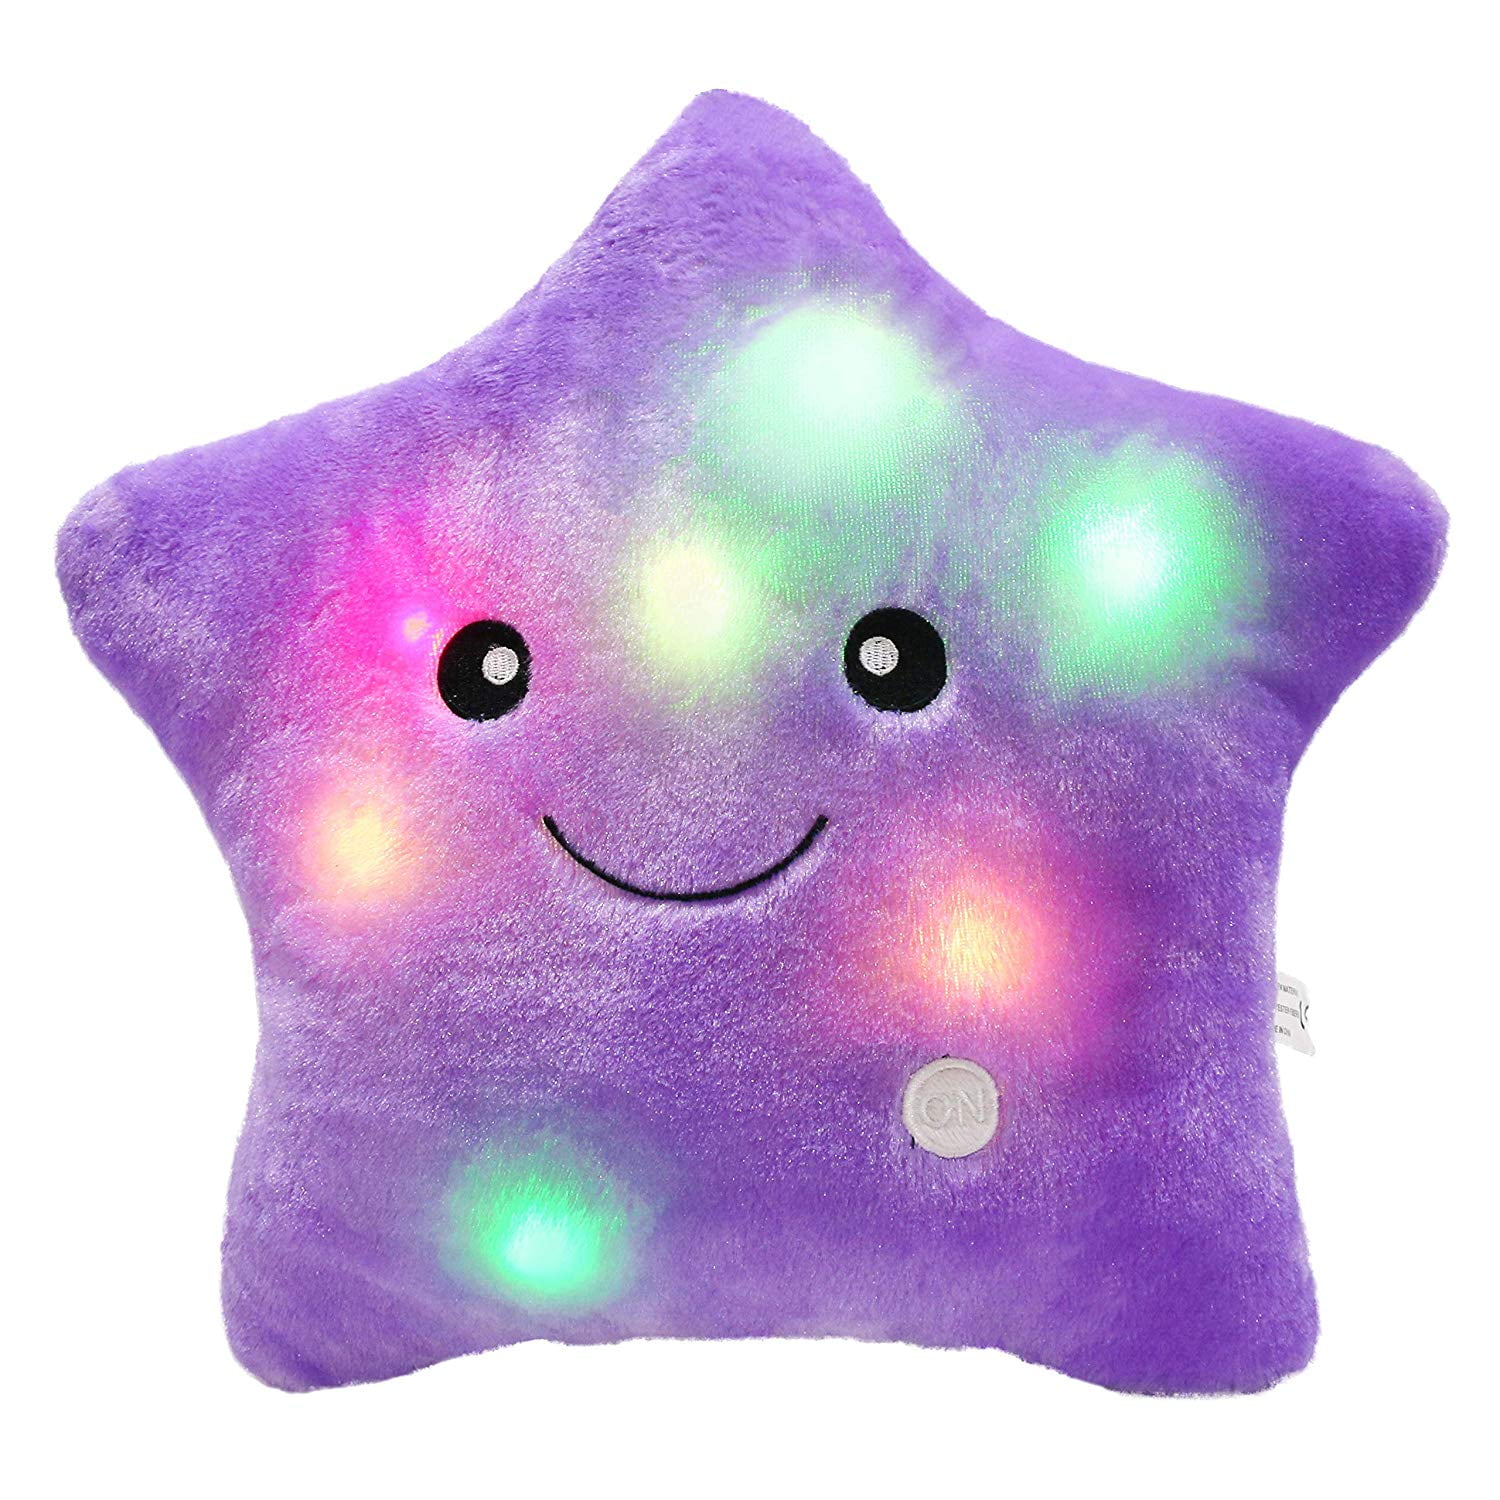 WEWILL Creative Twinkle Star Glowing LED Night Light Plush Pillows Stuffed Toys Yellow 